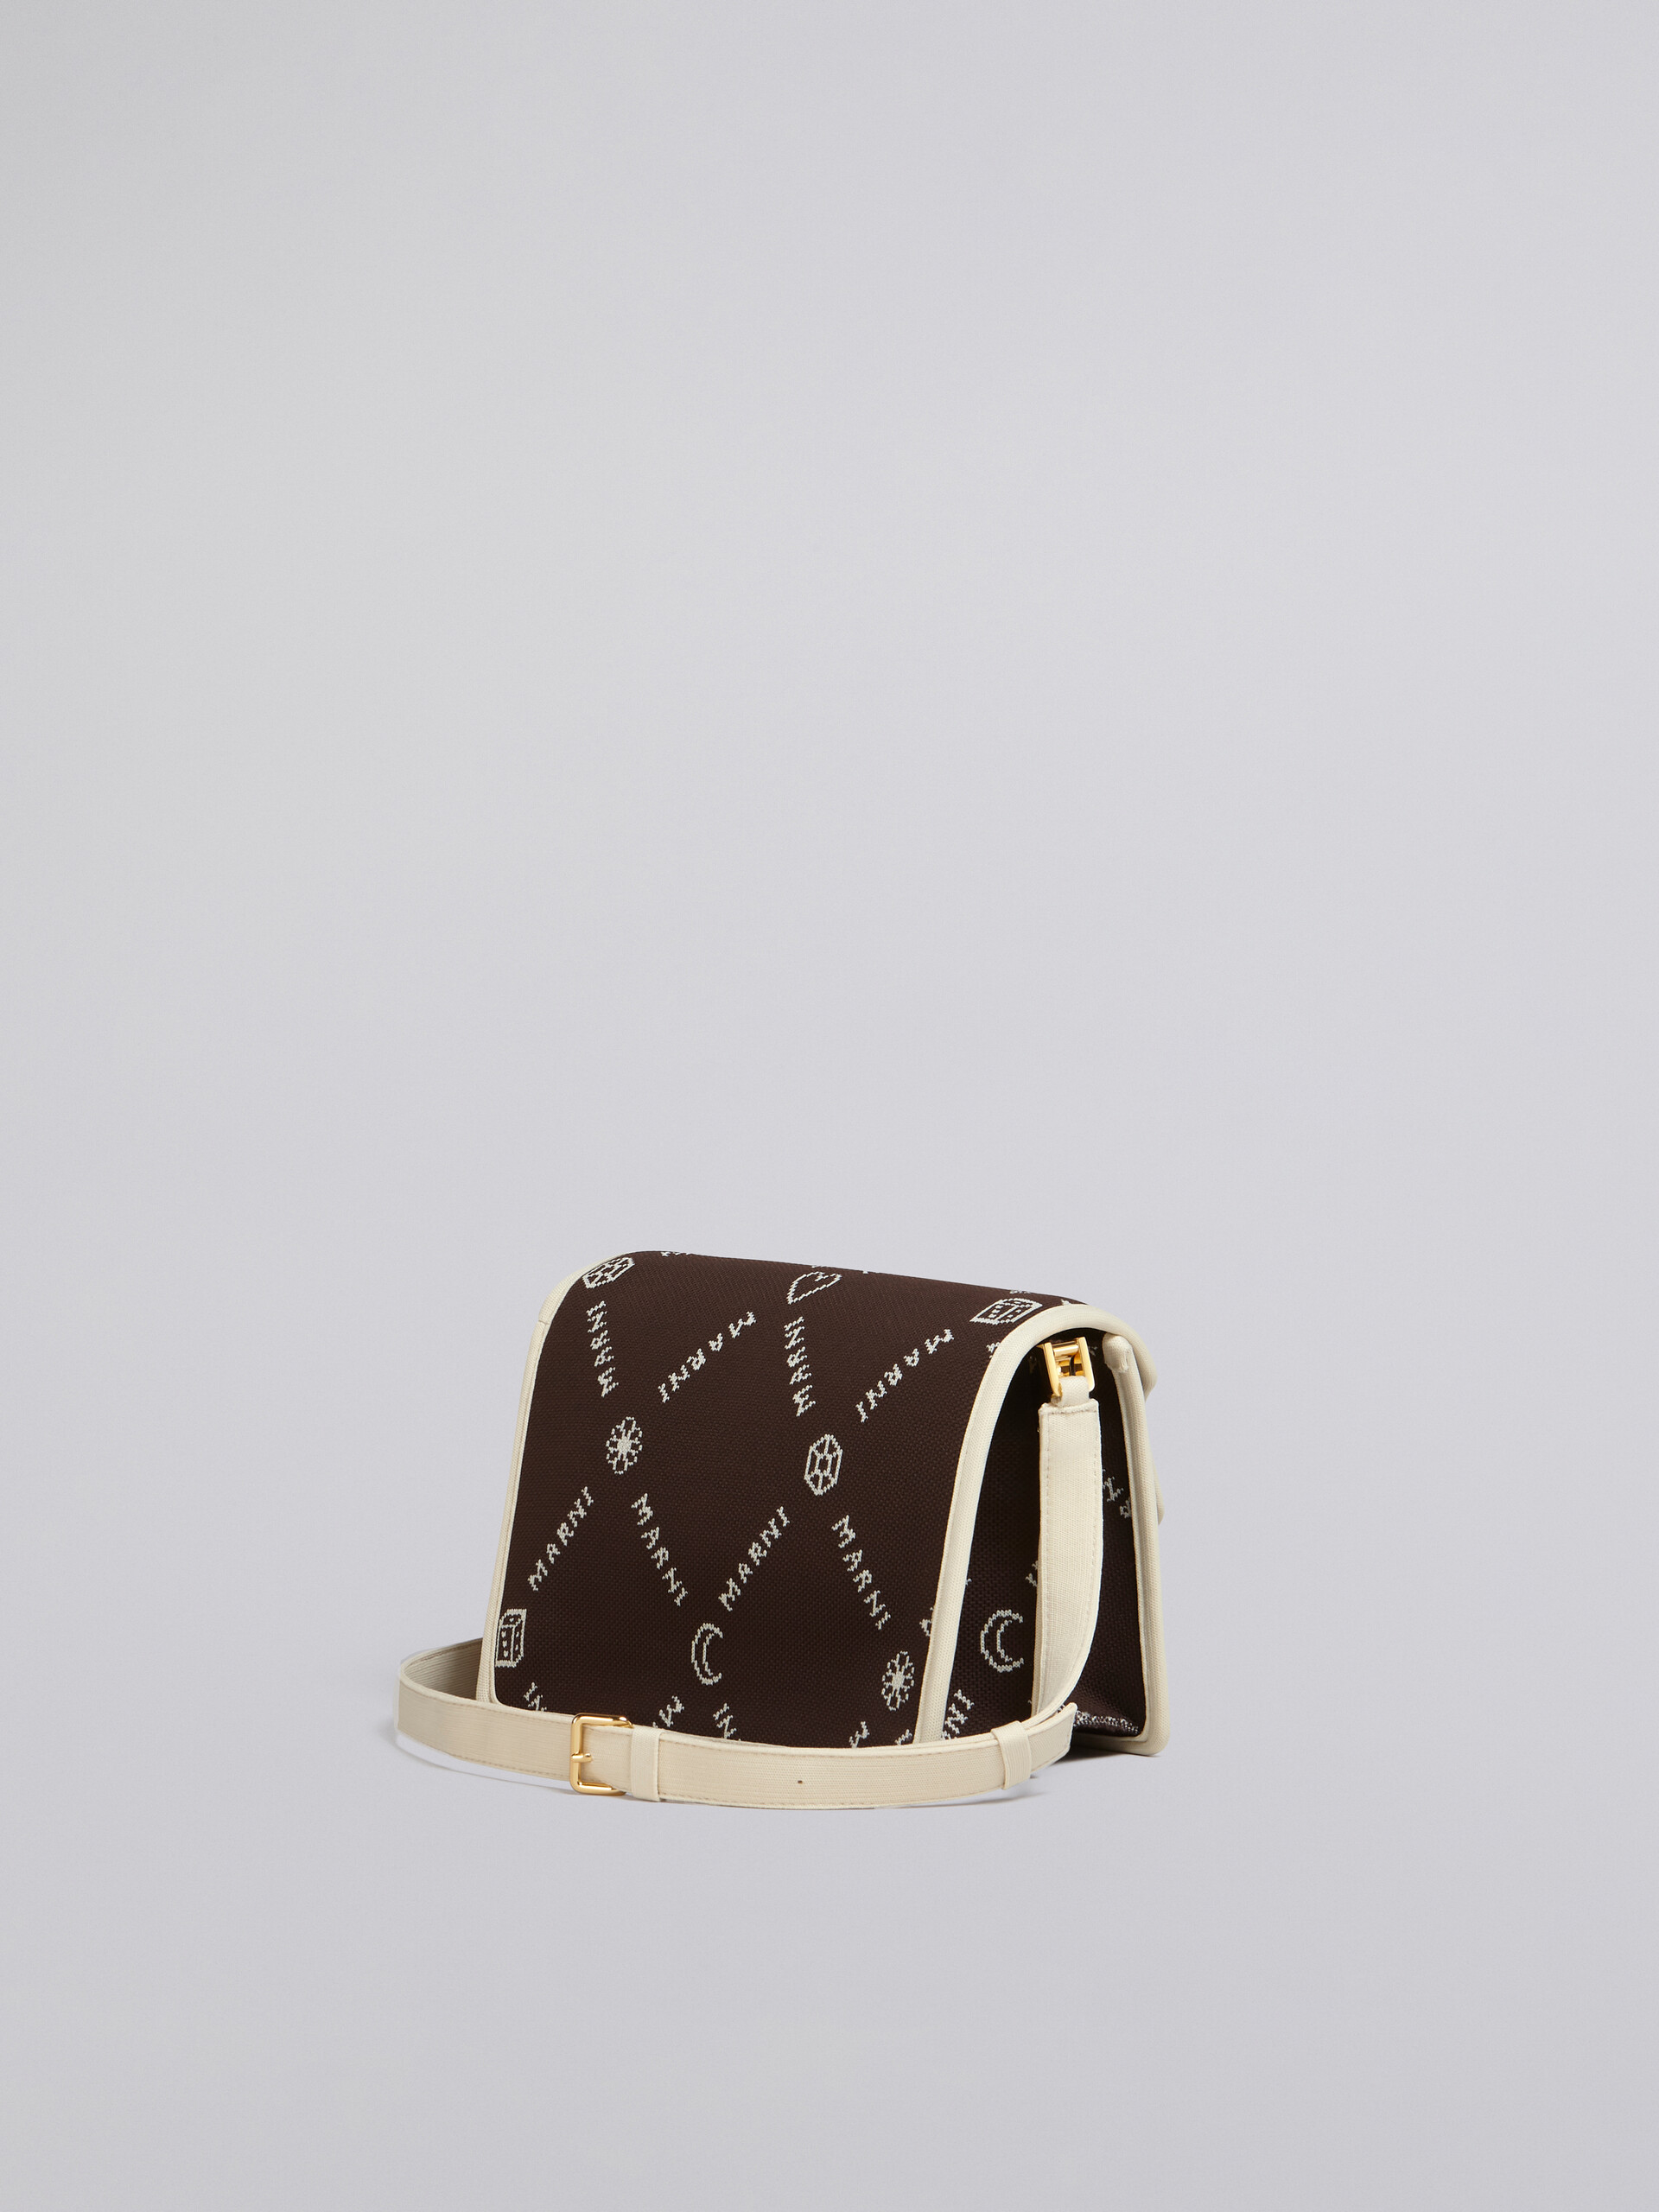 TRUNK SOFT medium bag in brown Marnigram jacquard - Shoulder Bag - Image 3